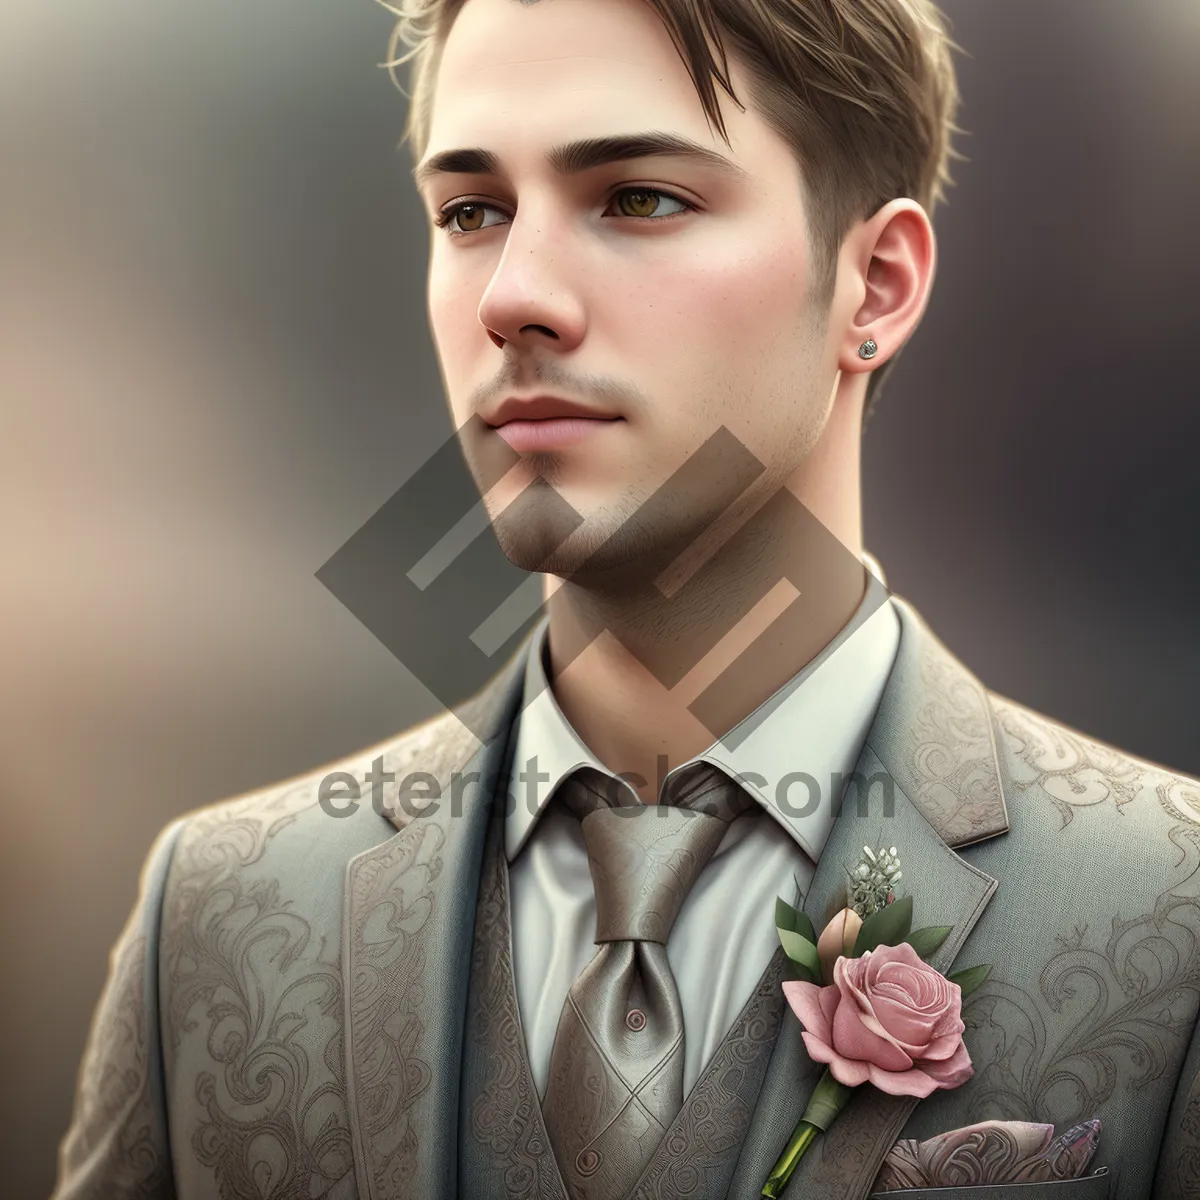 Picture of Successful Businessman in Elegant Suit with Confident Smile